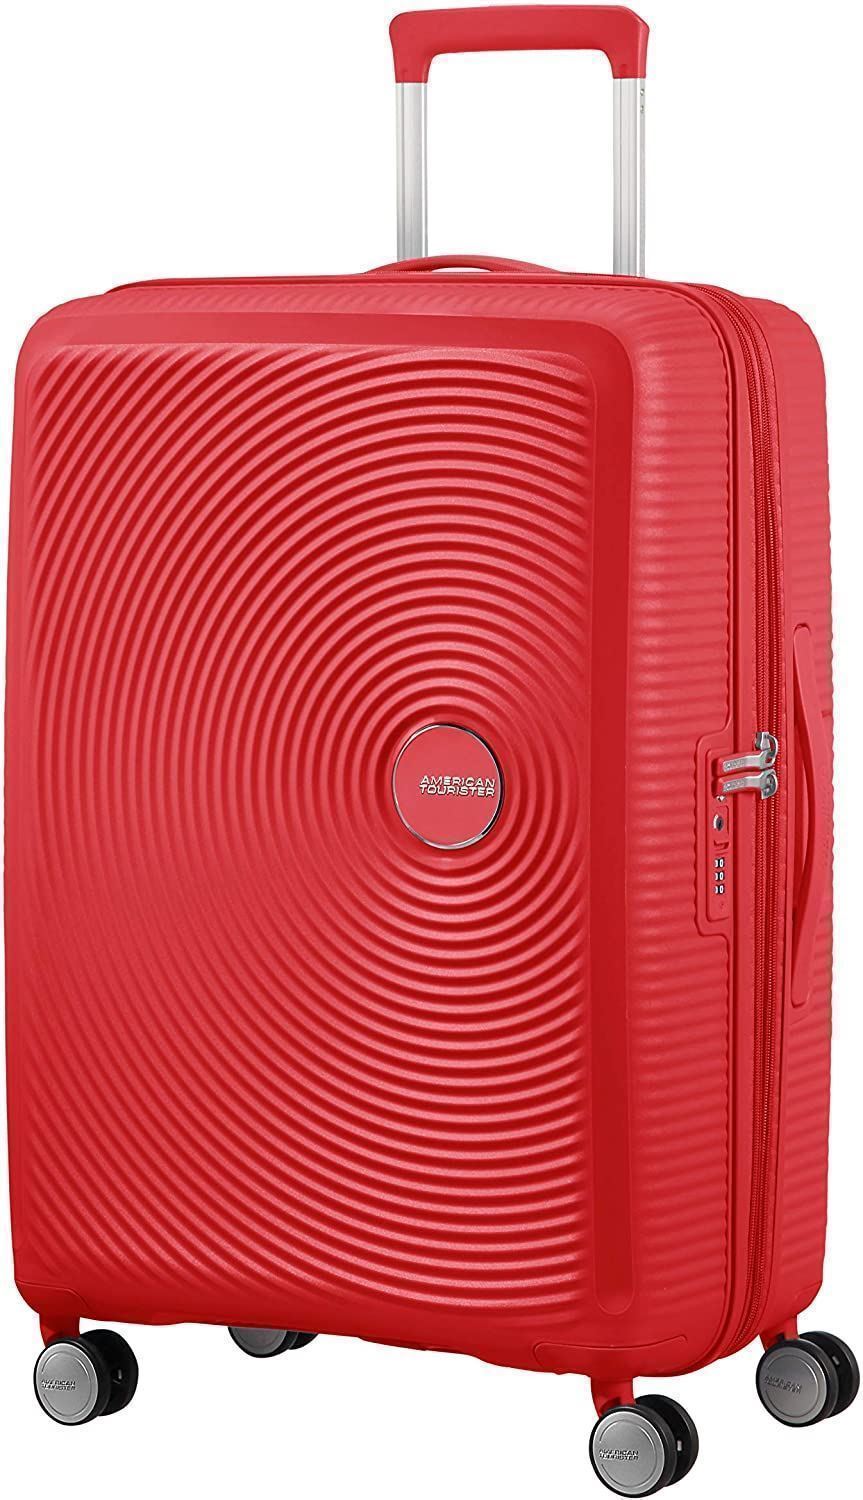 American Tourister Soundbox rigida mediana expandible roja 3 años de garantía - Imagen 1